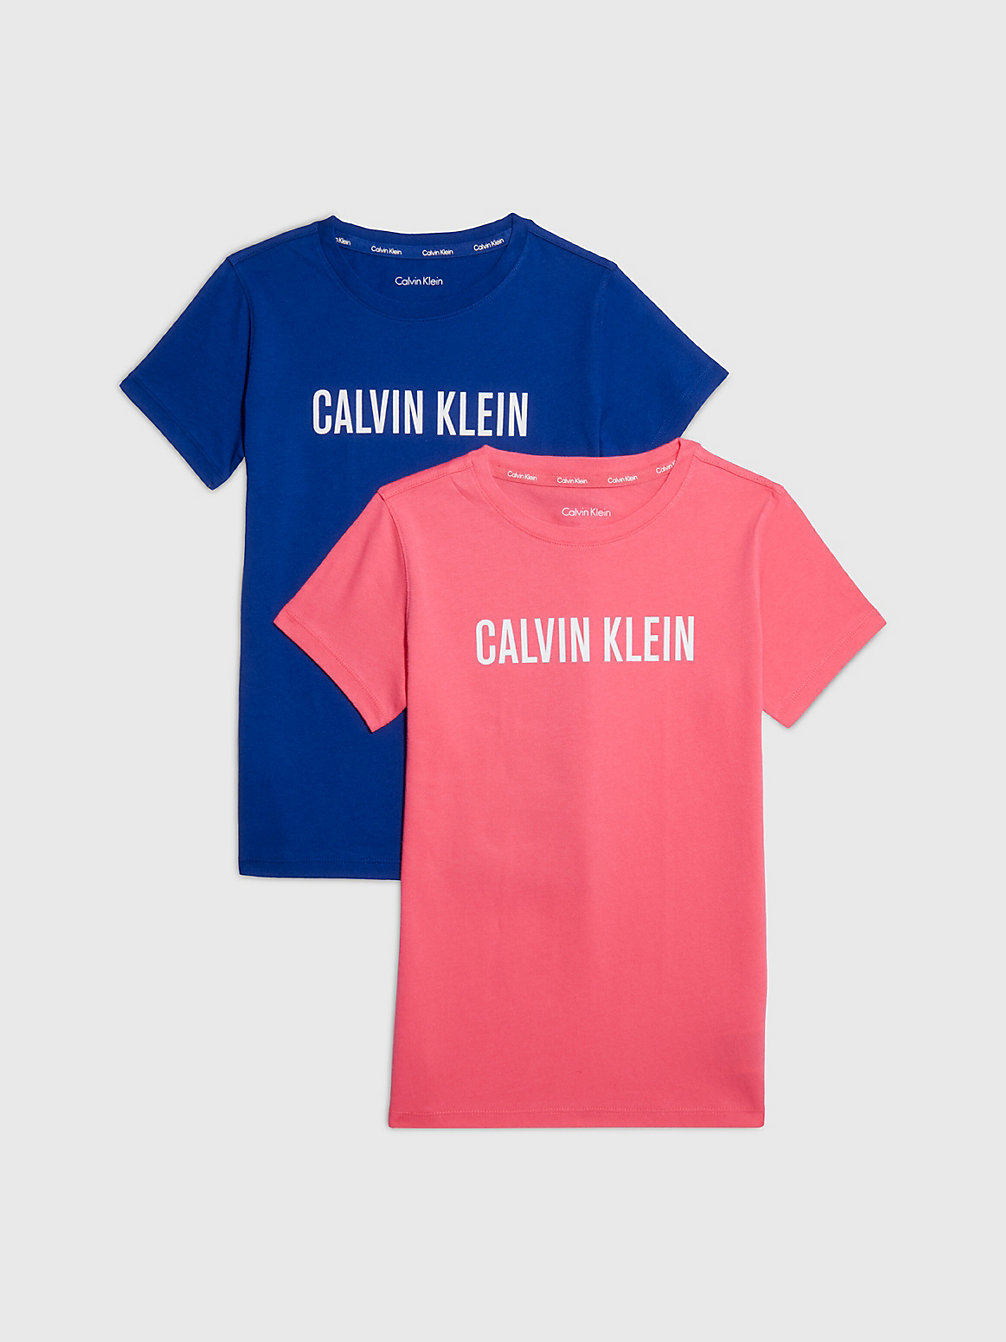 PINKFLASH/BOLDBLUE > 2er-Pack T-Shirts - Intense Power > undefined Maedchen - Calvin Klein